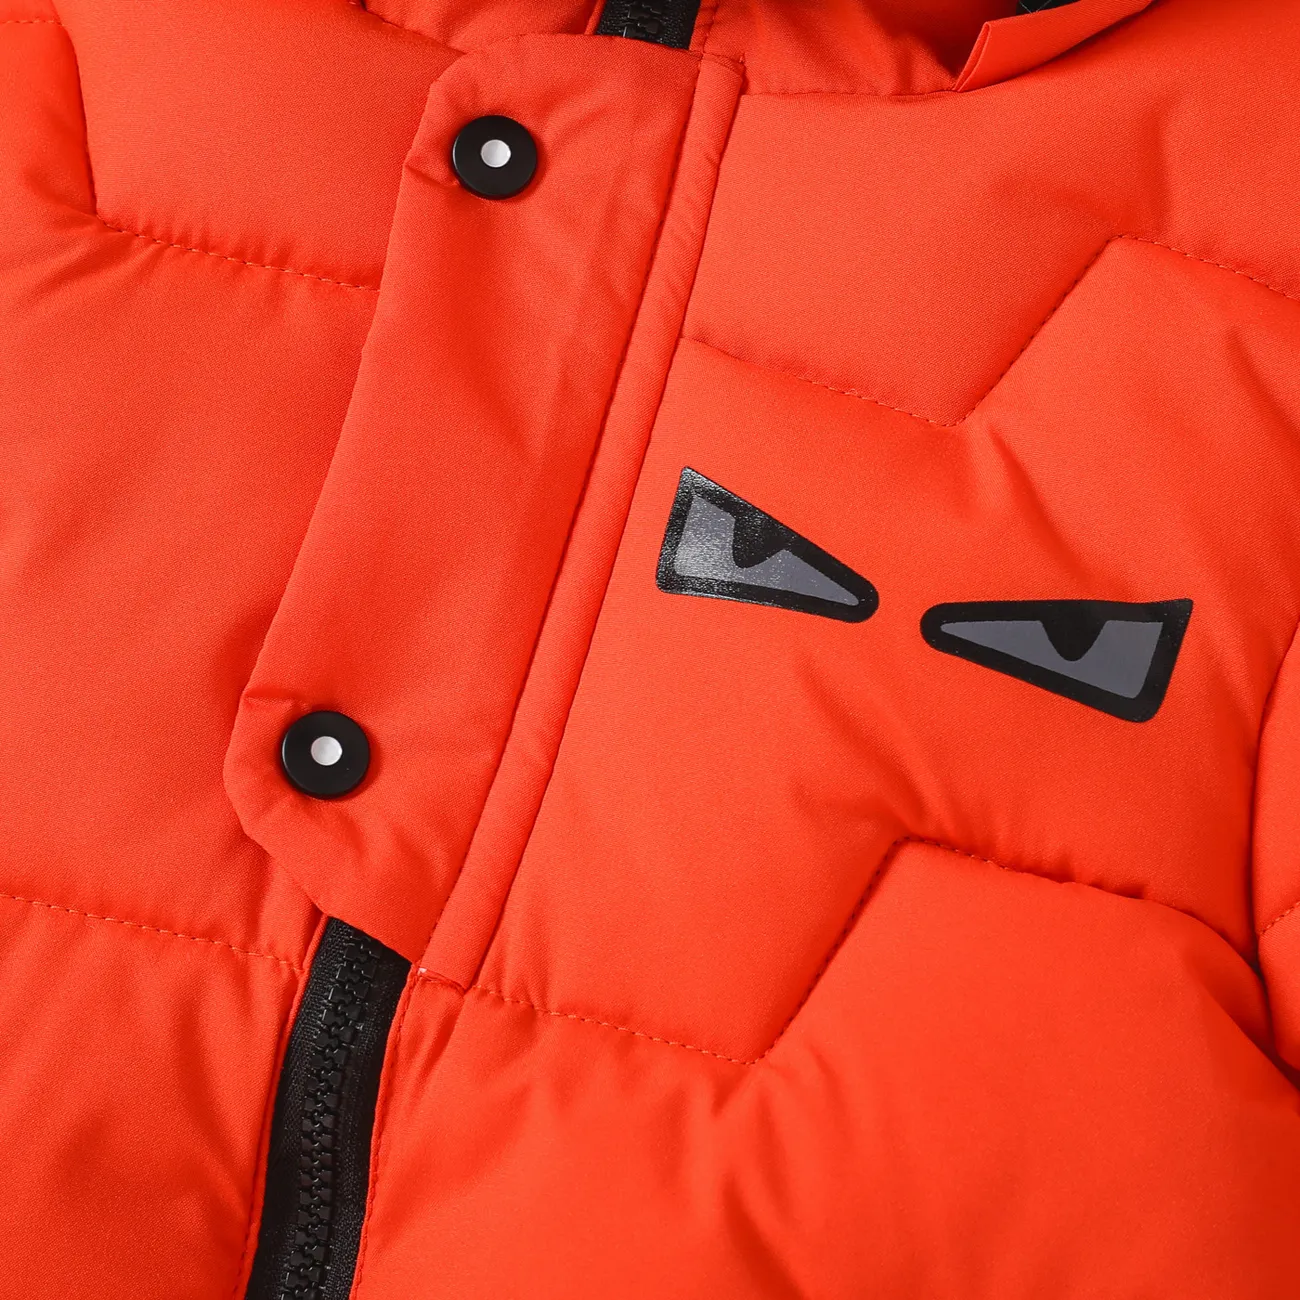 Niño pequeño hipertáctil 3D patrón animal grueso abrigo de algodón Naranja big image 1